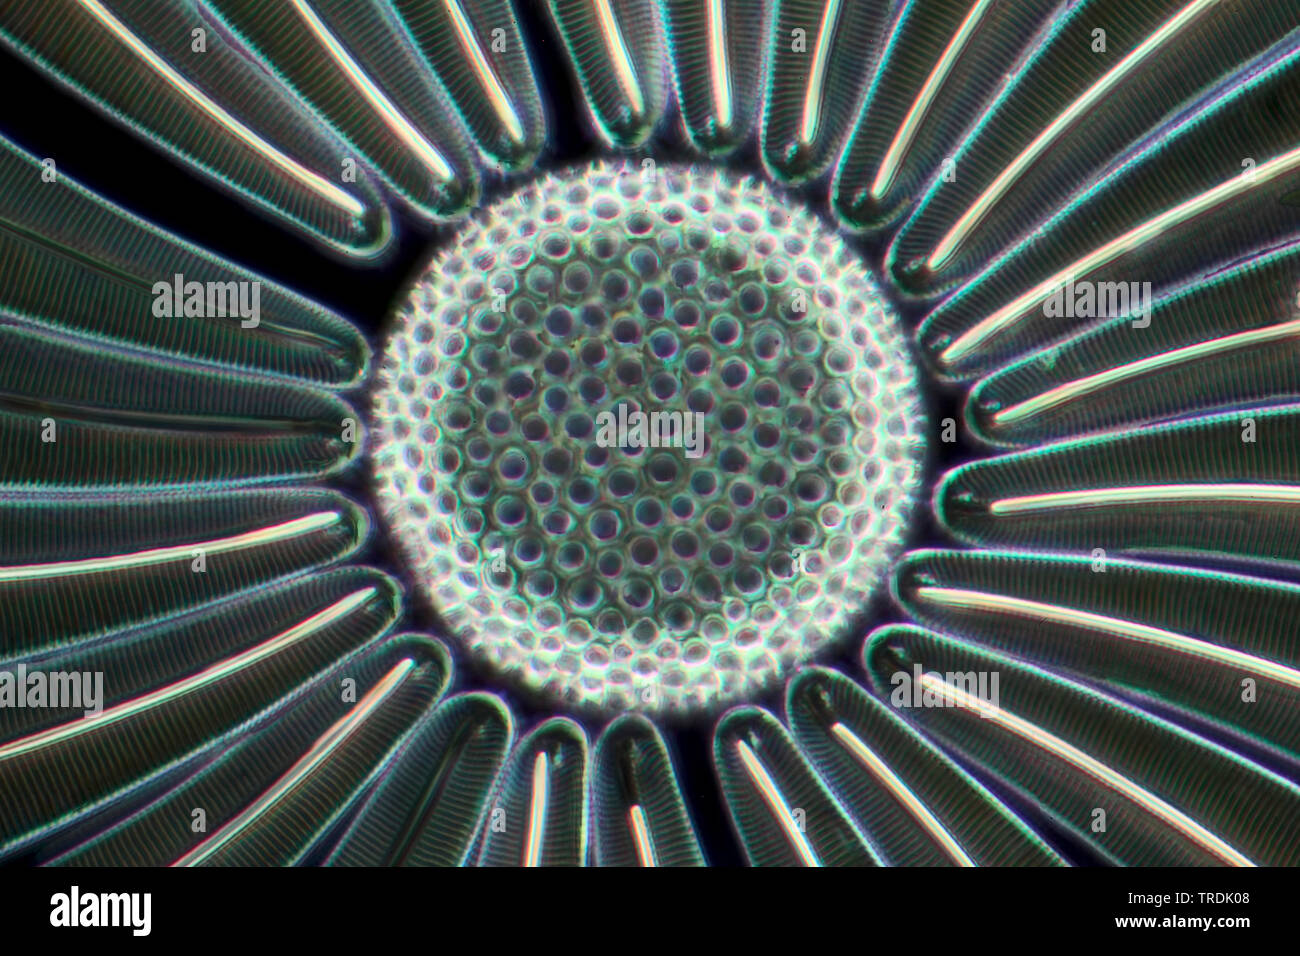 diatom (Diatomeae), dioatomeen in darkfield, x 140 Stock Photo